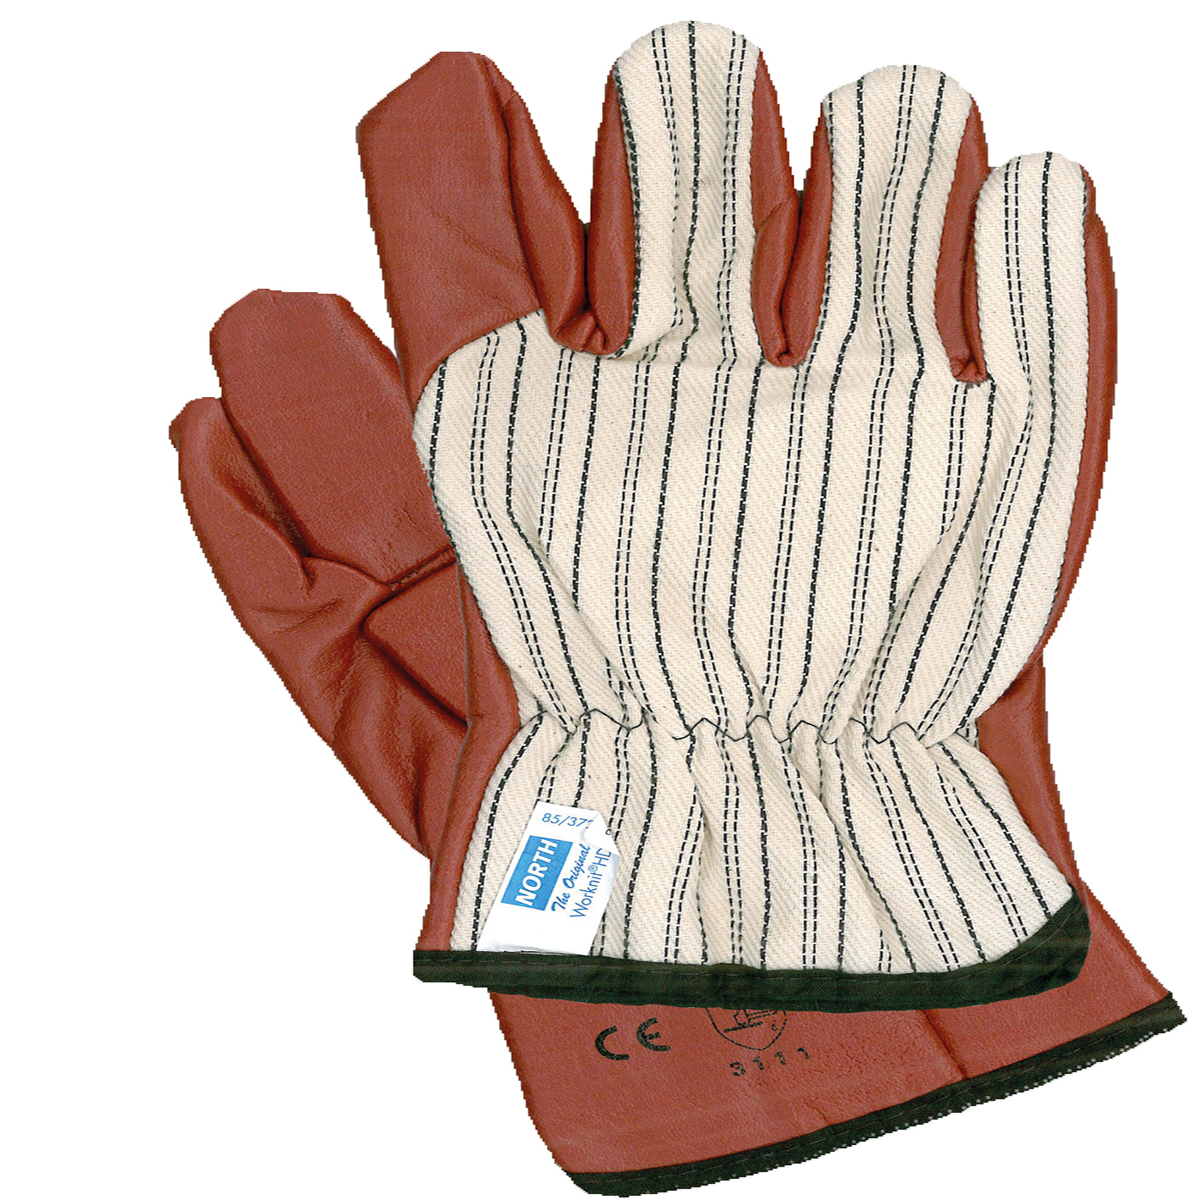 North Safety Polyurethane Coated Nylon Gloves - NF15 (Small)